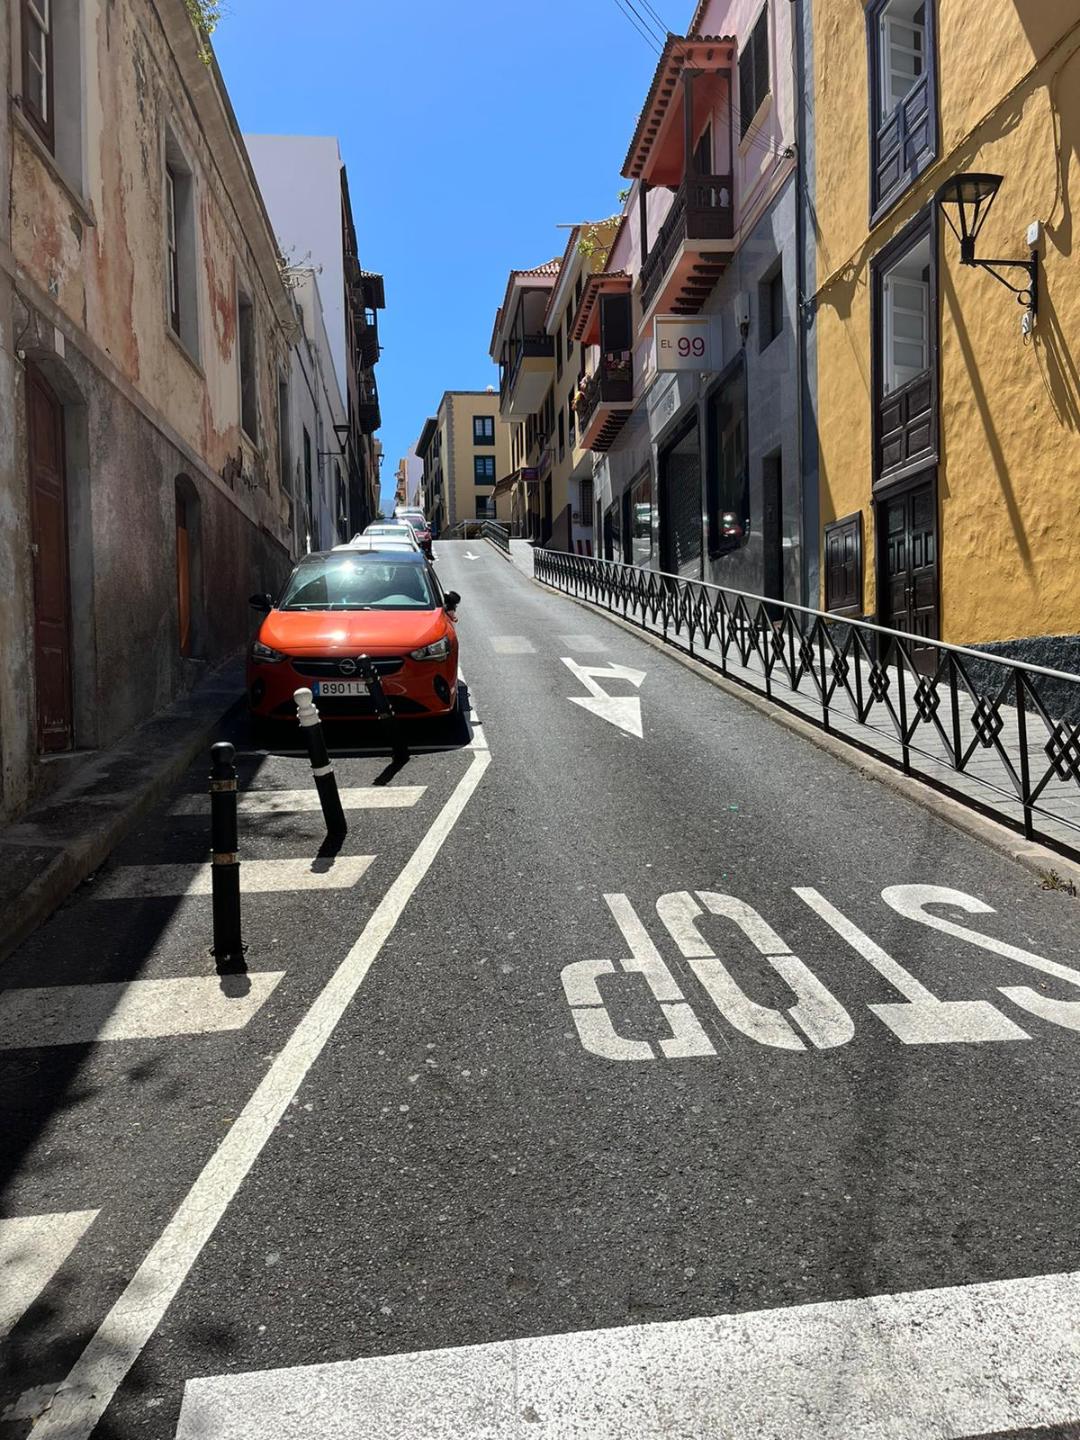 kopcovita ulica v puerto de la cruz bez premavky